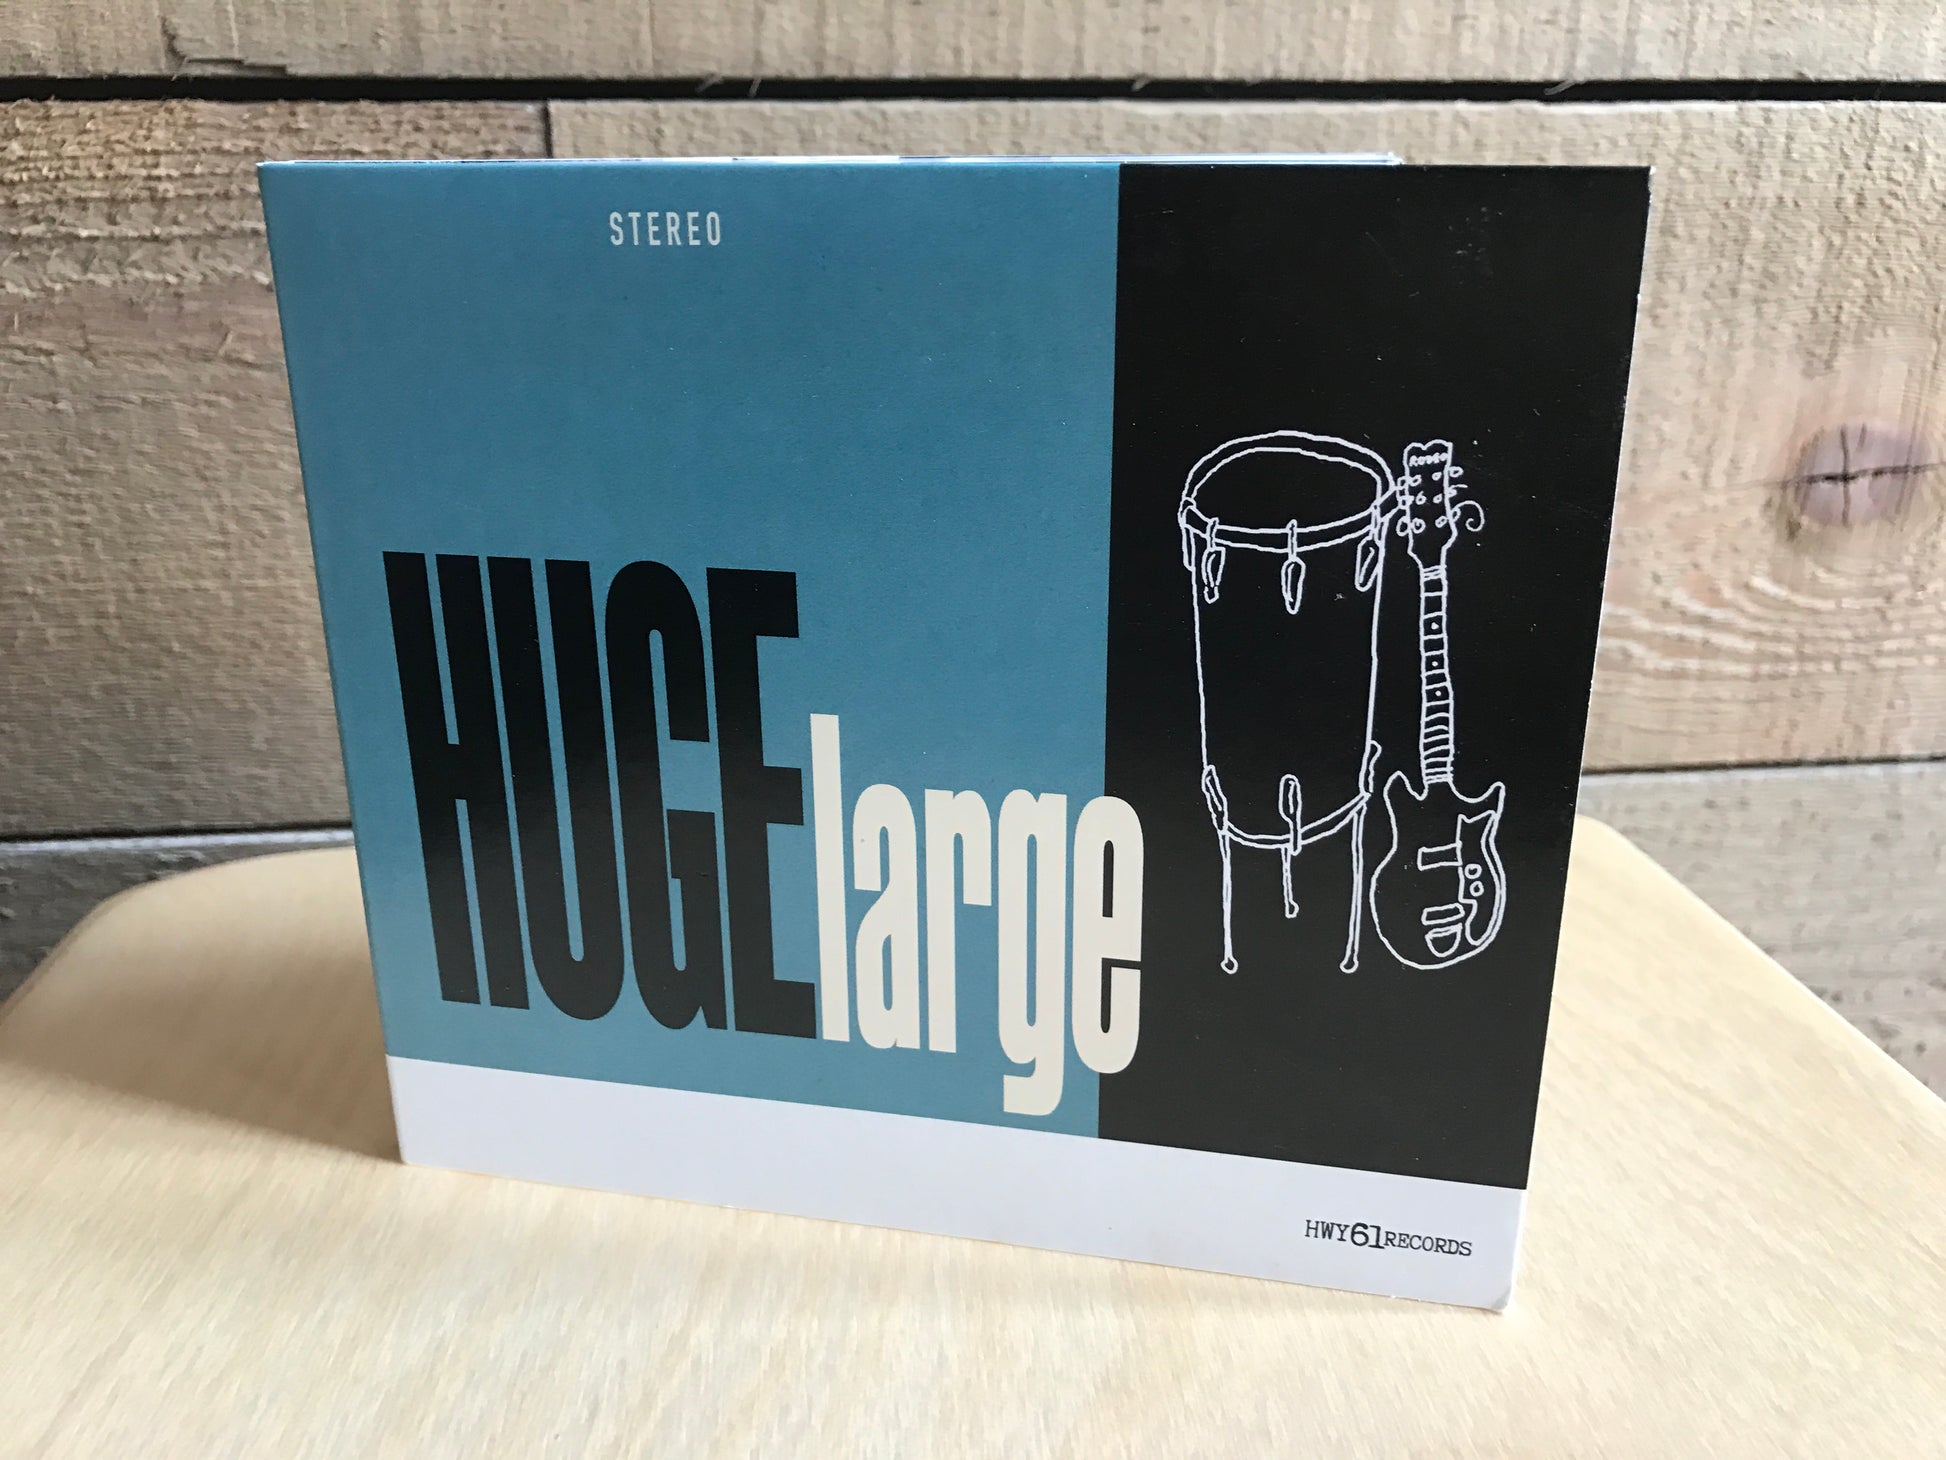 HUGElarge CD cover blue rose music 2015